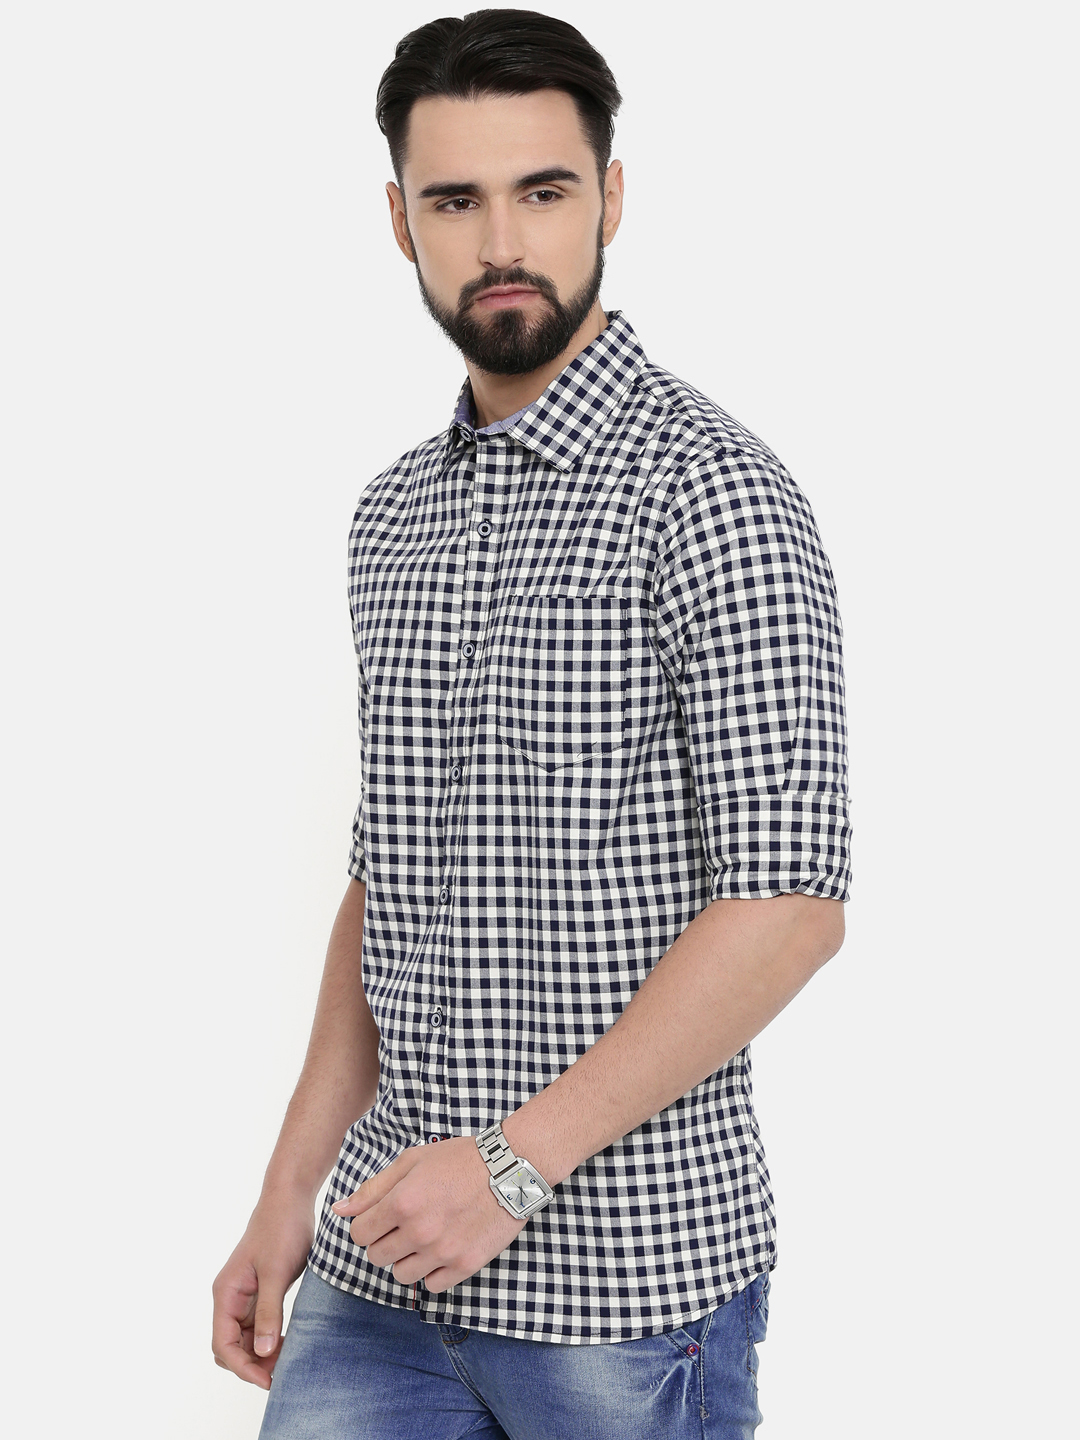 Buy Seta Men's Multicolor Checks Casual Shirts Online @ ₹719 from ShopClues